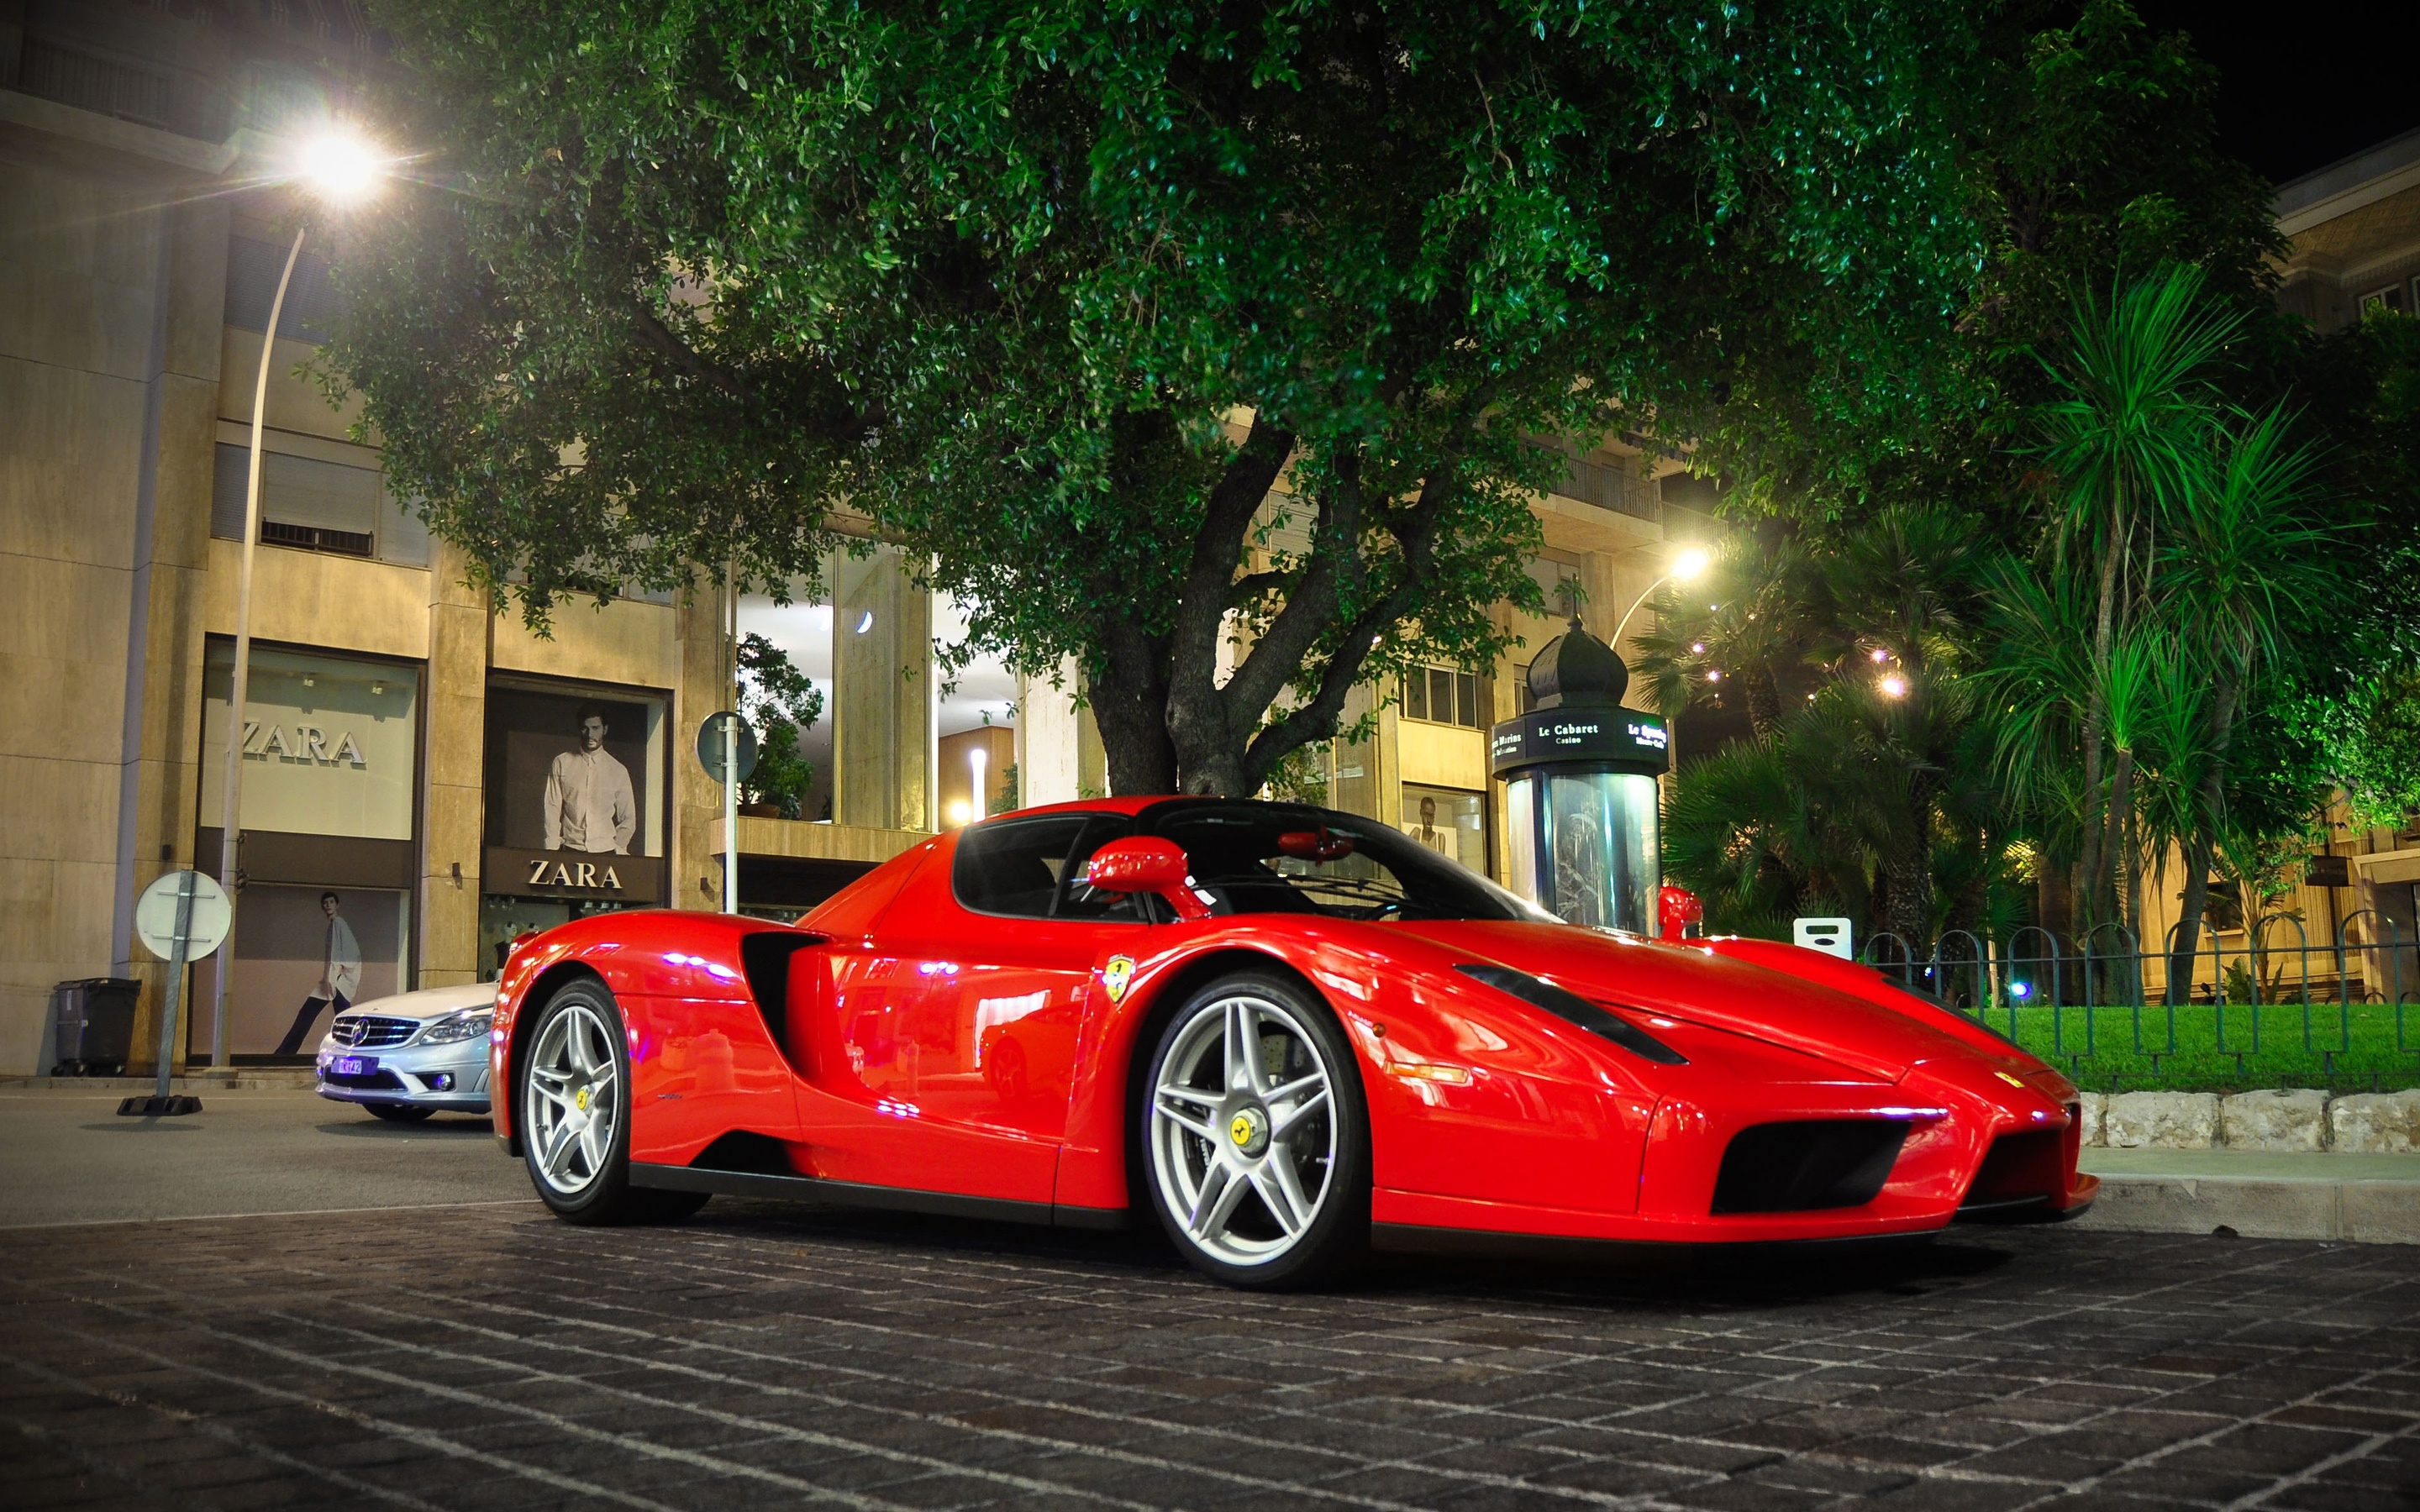 Ferrari Enzo Wallpaper in jpg format for free download